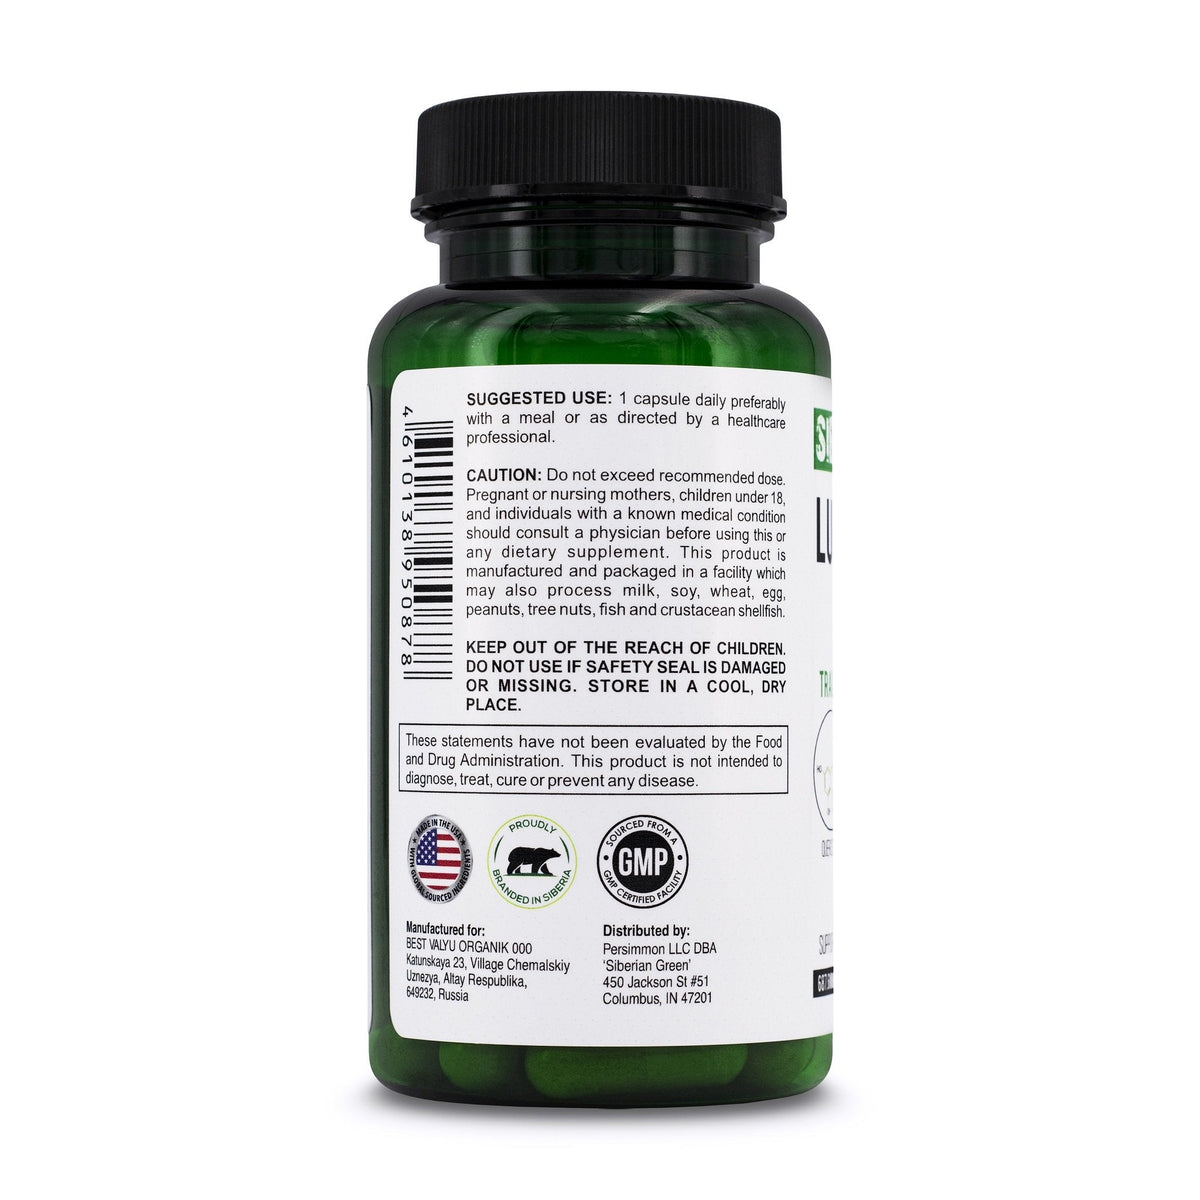 Herbal Lung Support Siberian Green 60 Caps - Bioflavonoides Quercetina Corteza de Pino